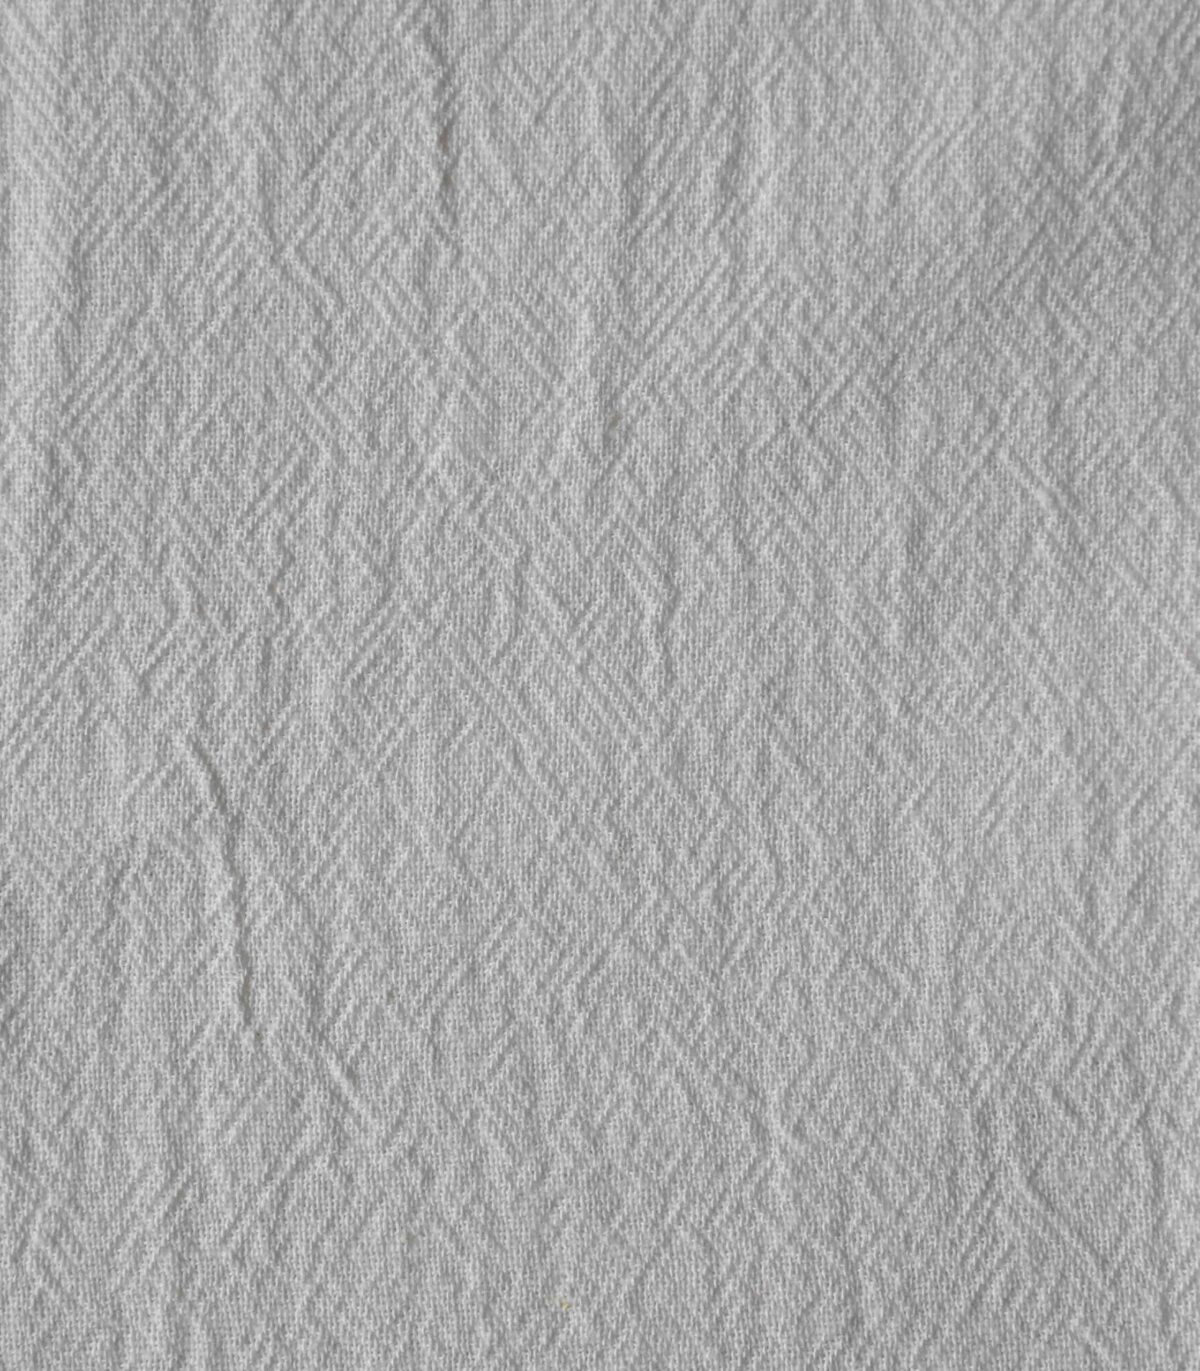 Cotton Flax Plain RFD Woven Fabric